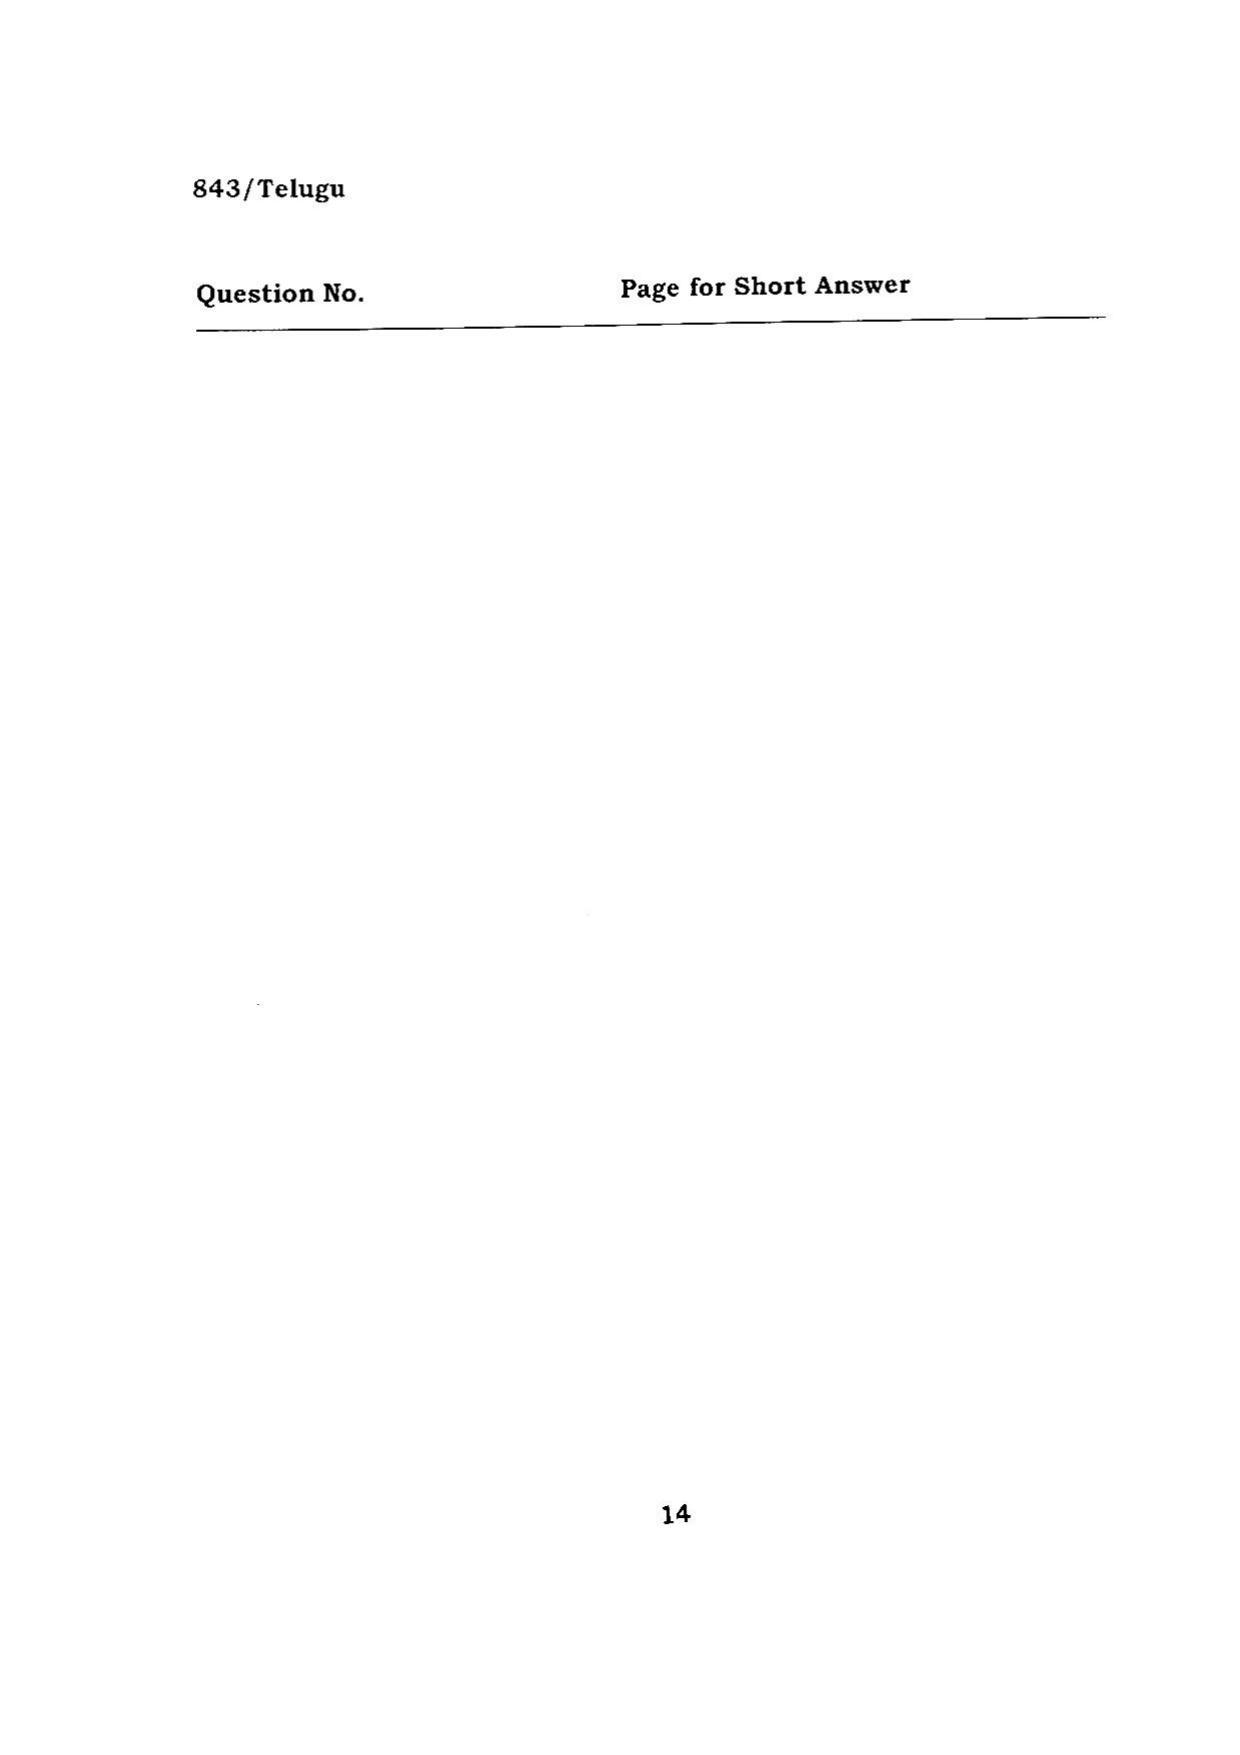 BHU RET TELUGU 2015 Question Paper - Page 14